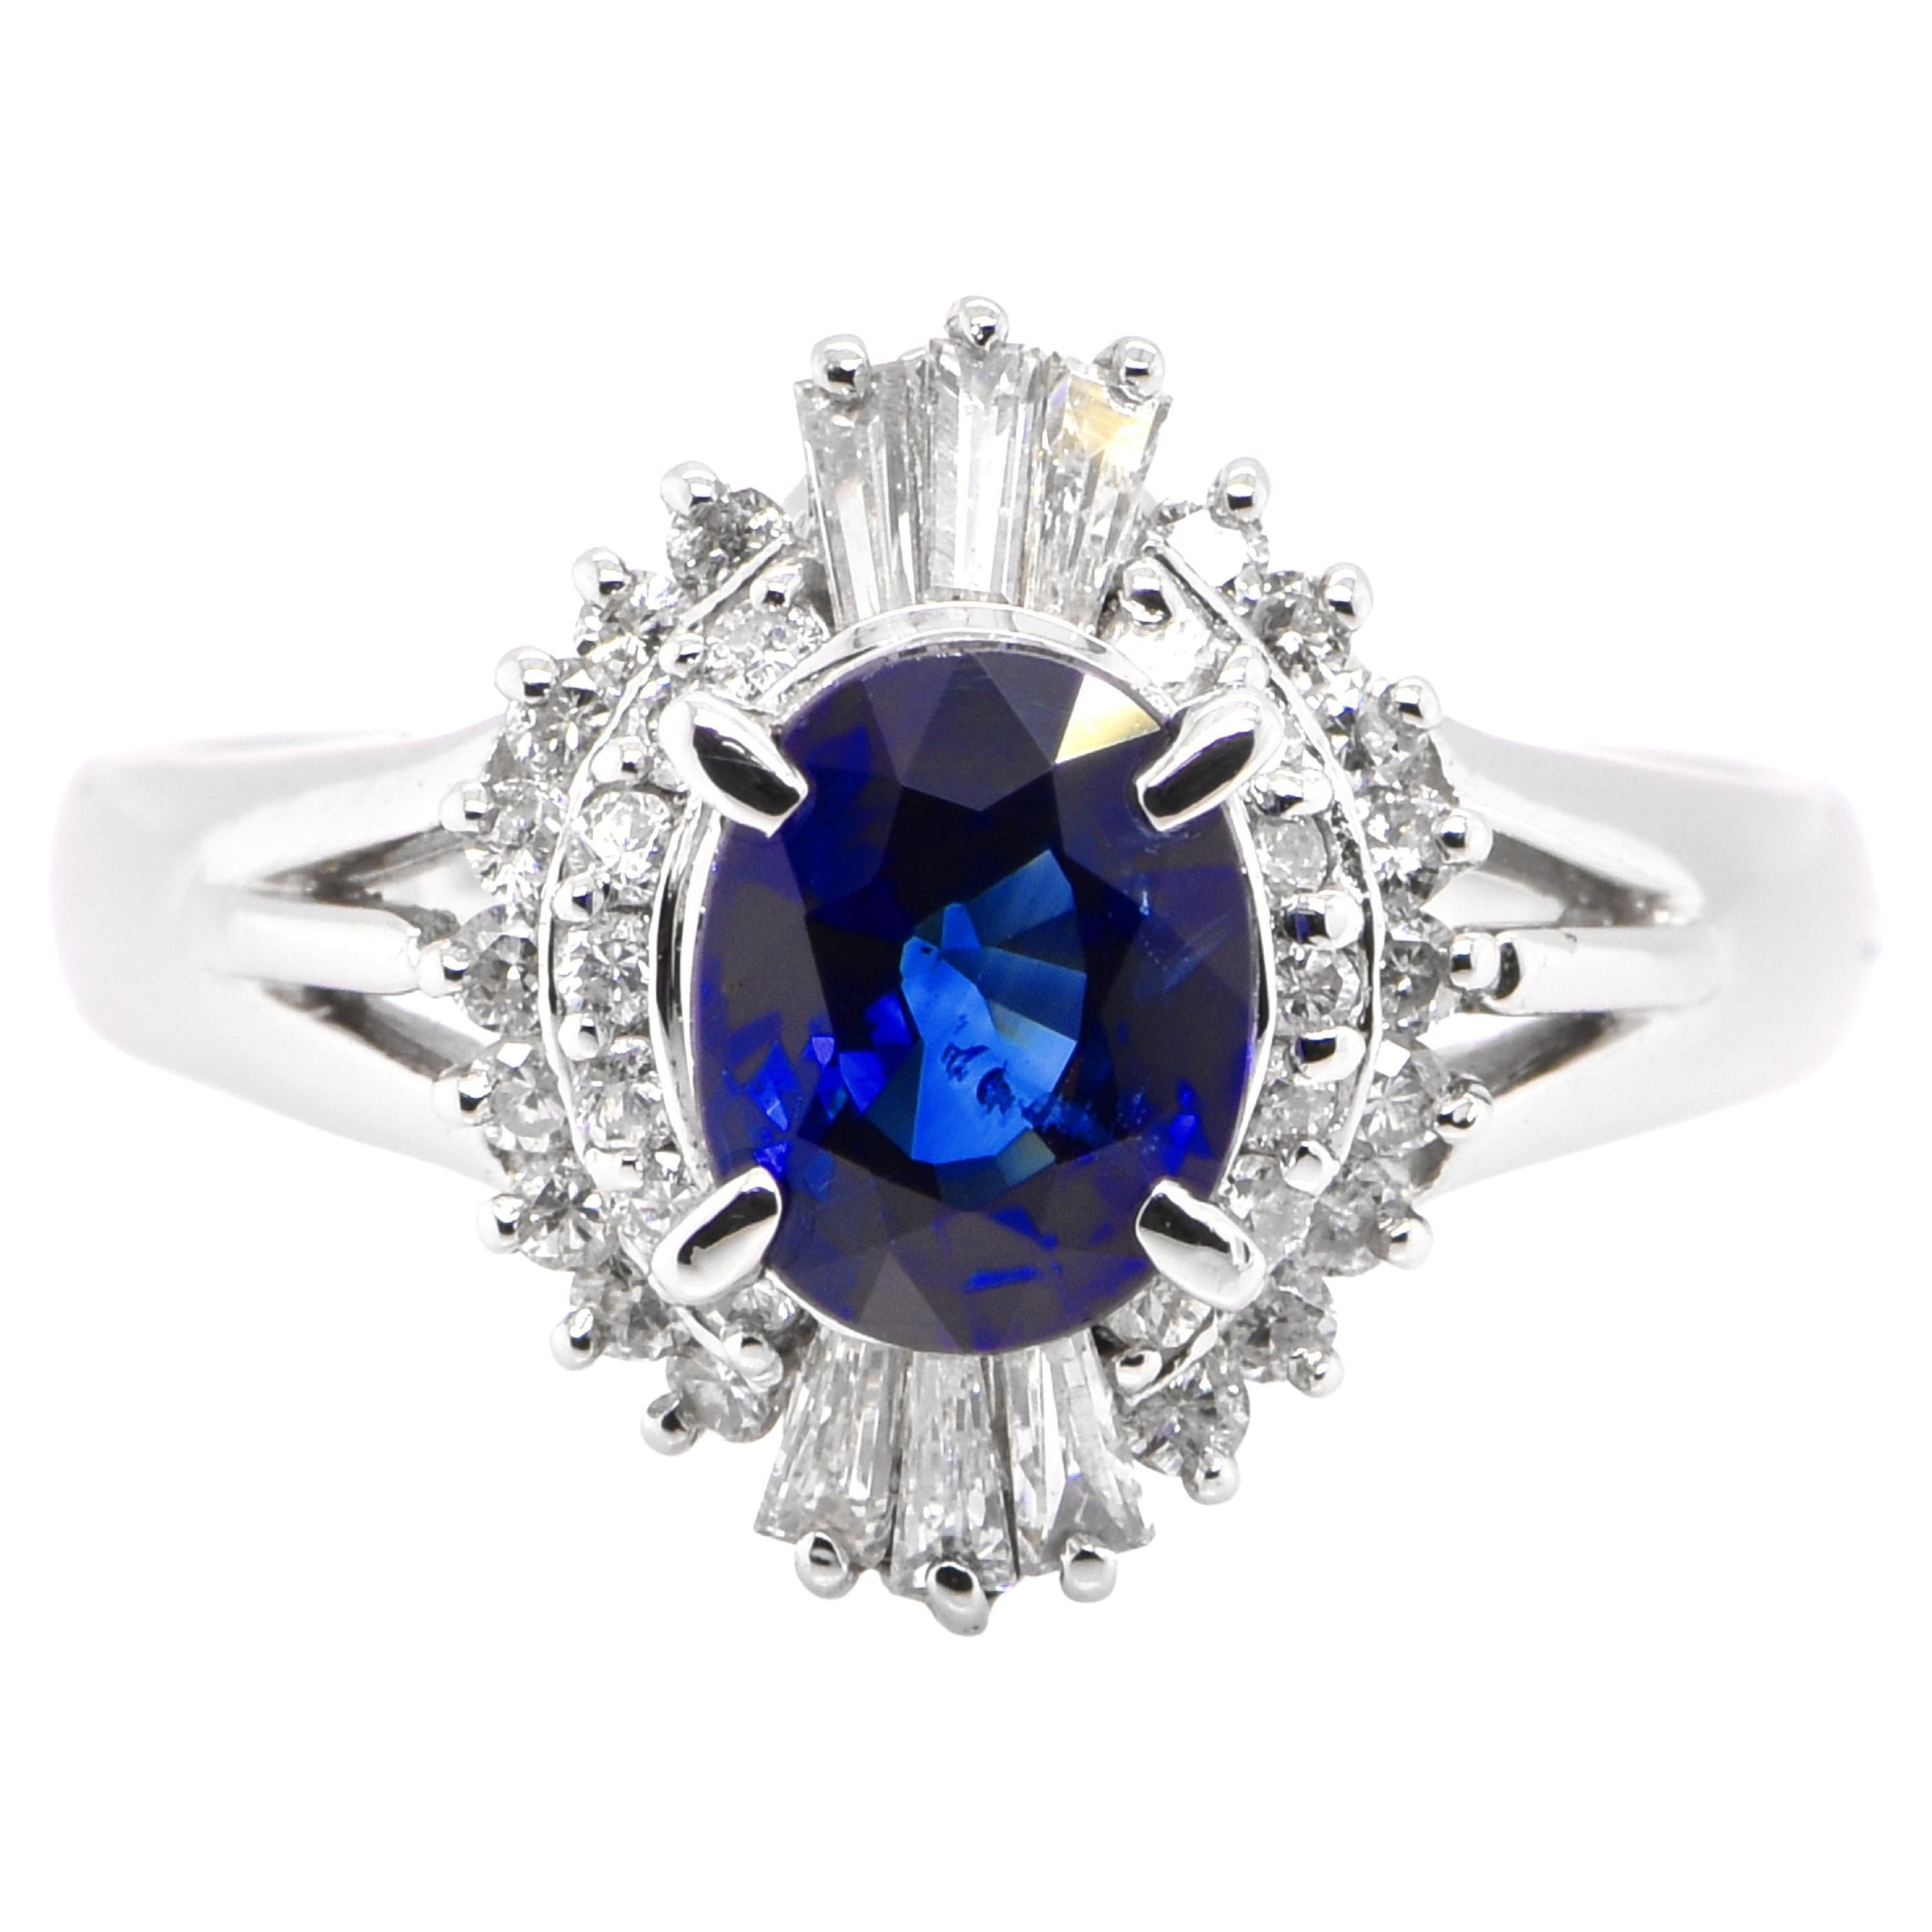 1.06 Carat Natural Royal Blue Sapphire & Diamond Ballerina Ring set in Platinum